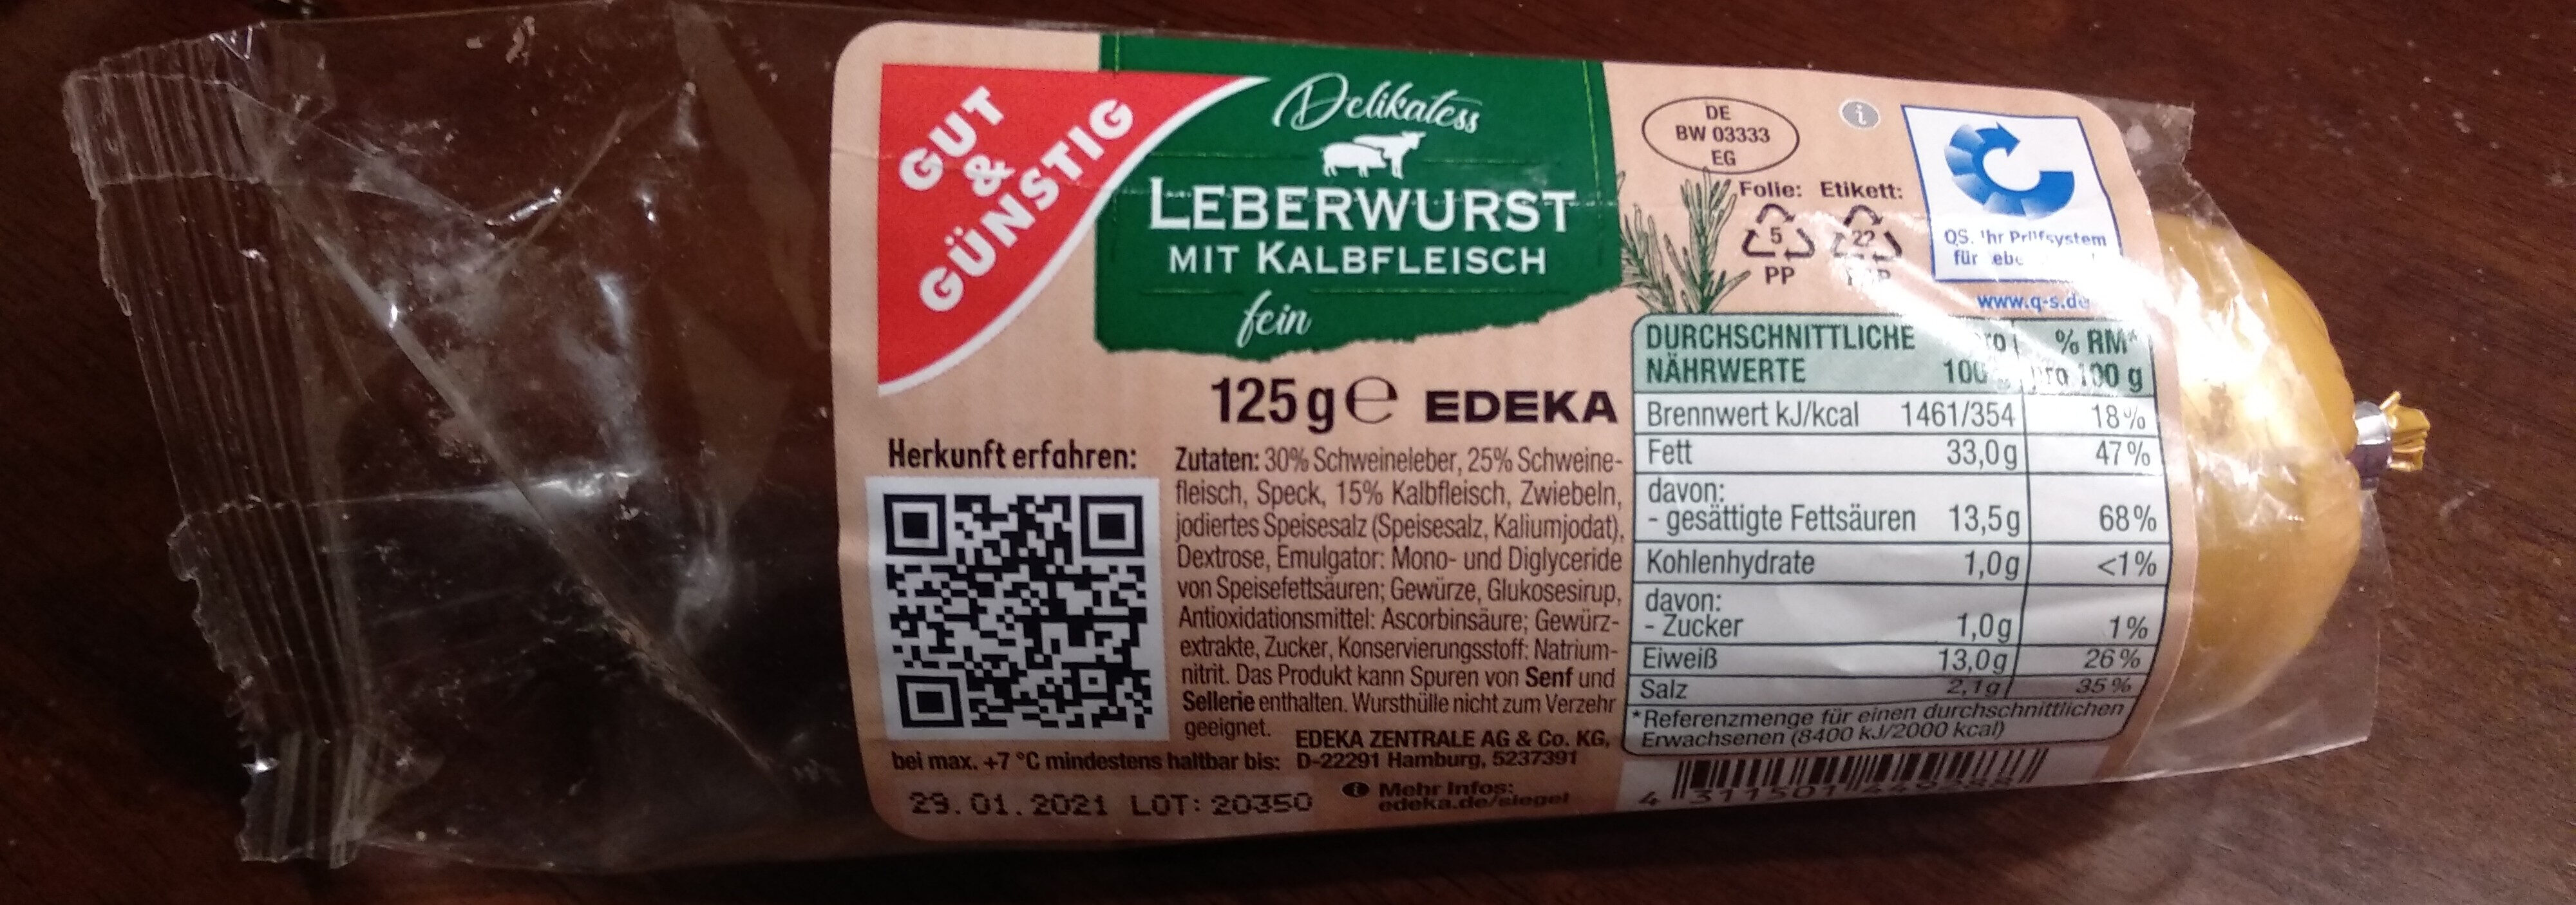 Delikatess Leberwurst mit Kalbfleisch fein - Product - de